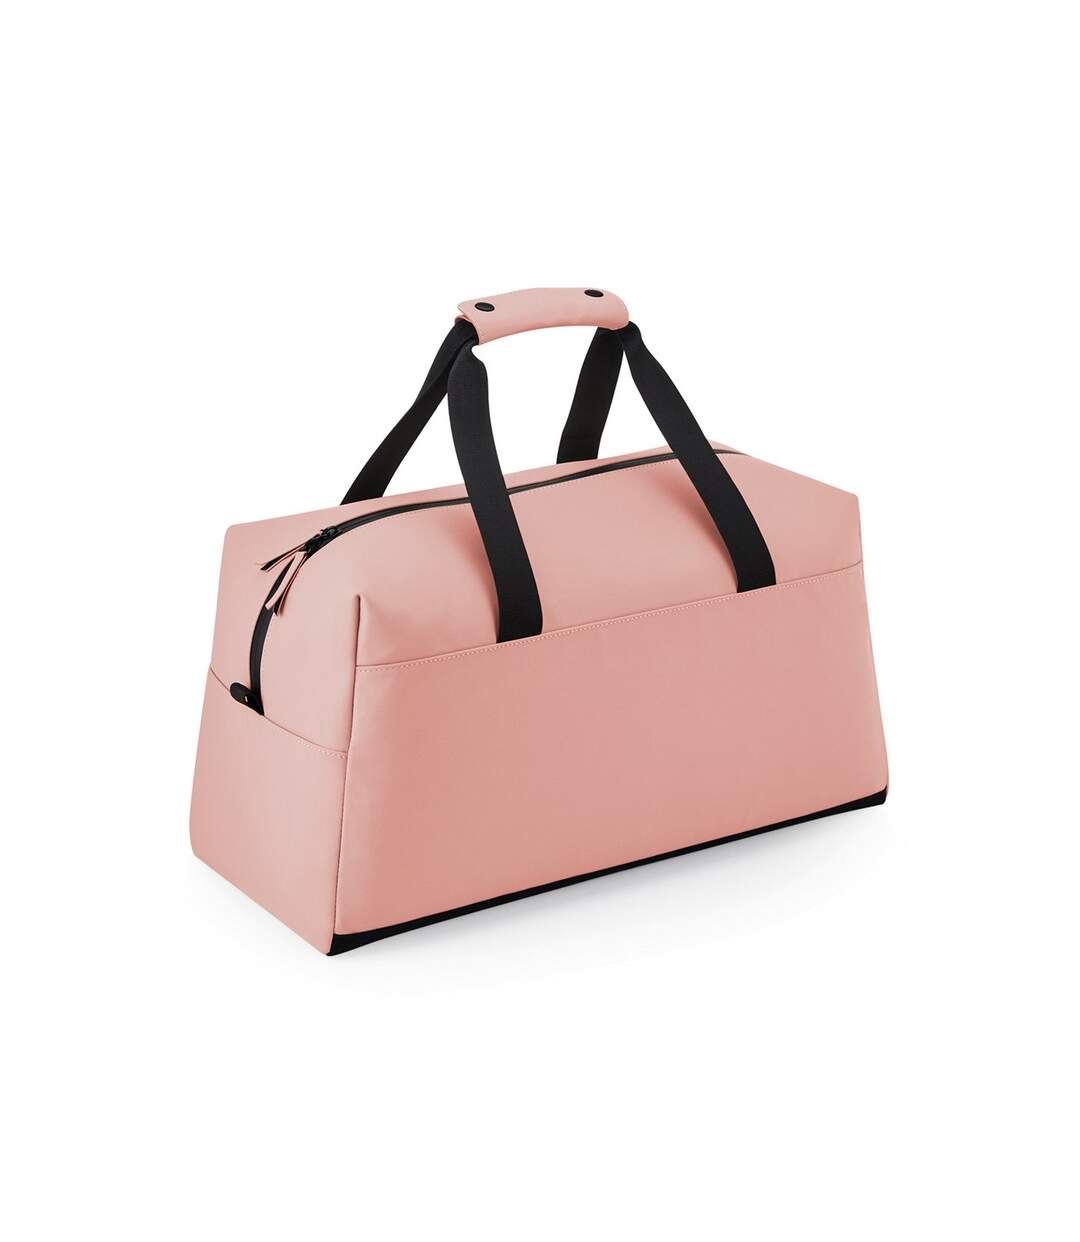 Bagbase PU Duffle Bag (Nude Pink) (One Size)